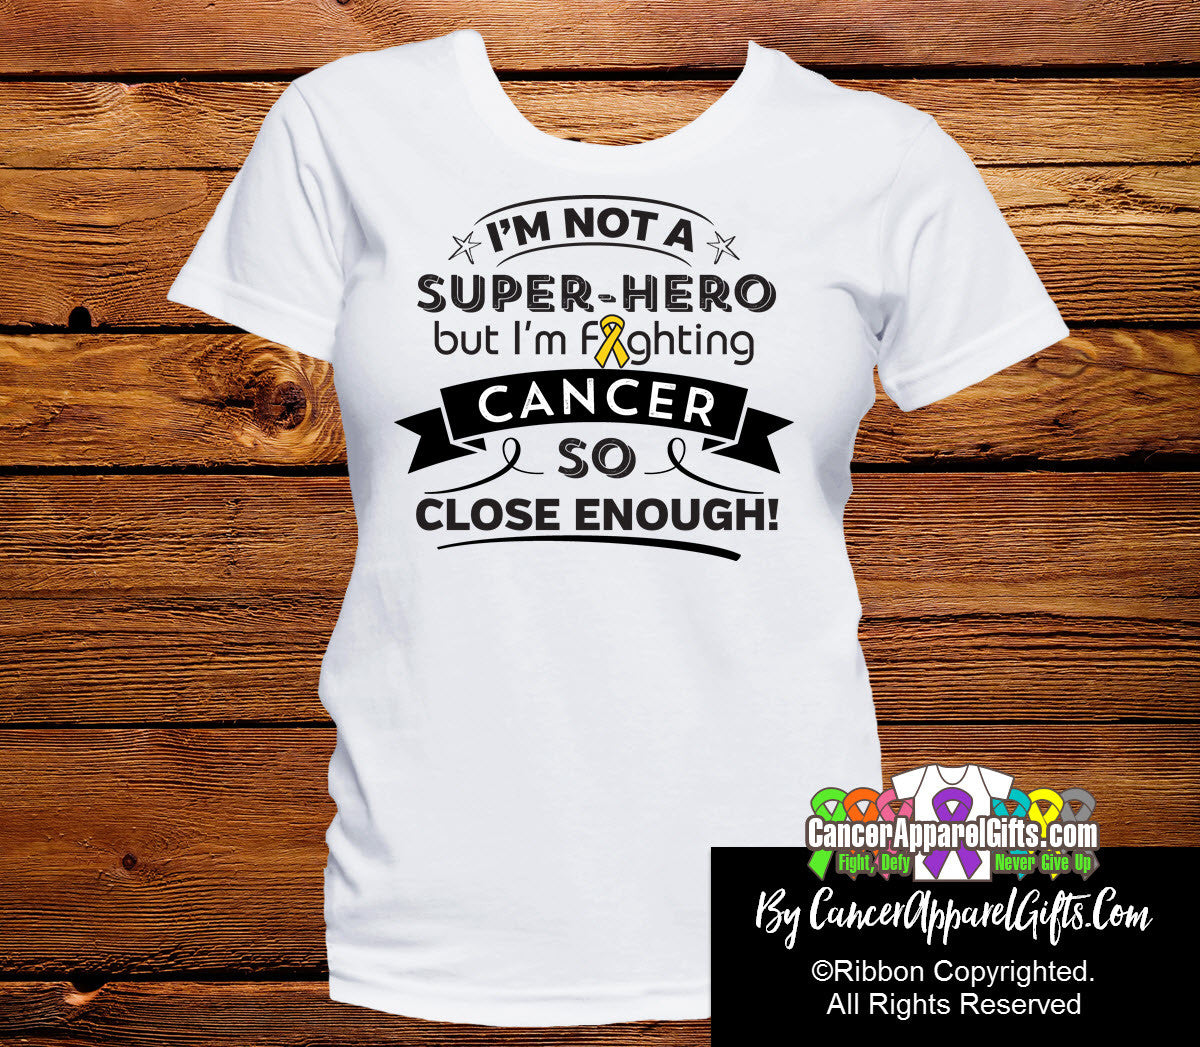 Childhood Cancer Not a Super-Hero Shirts